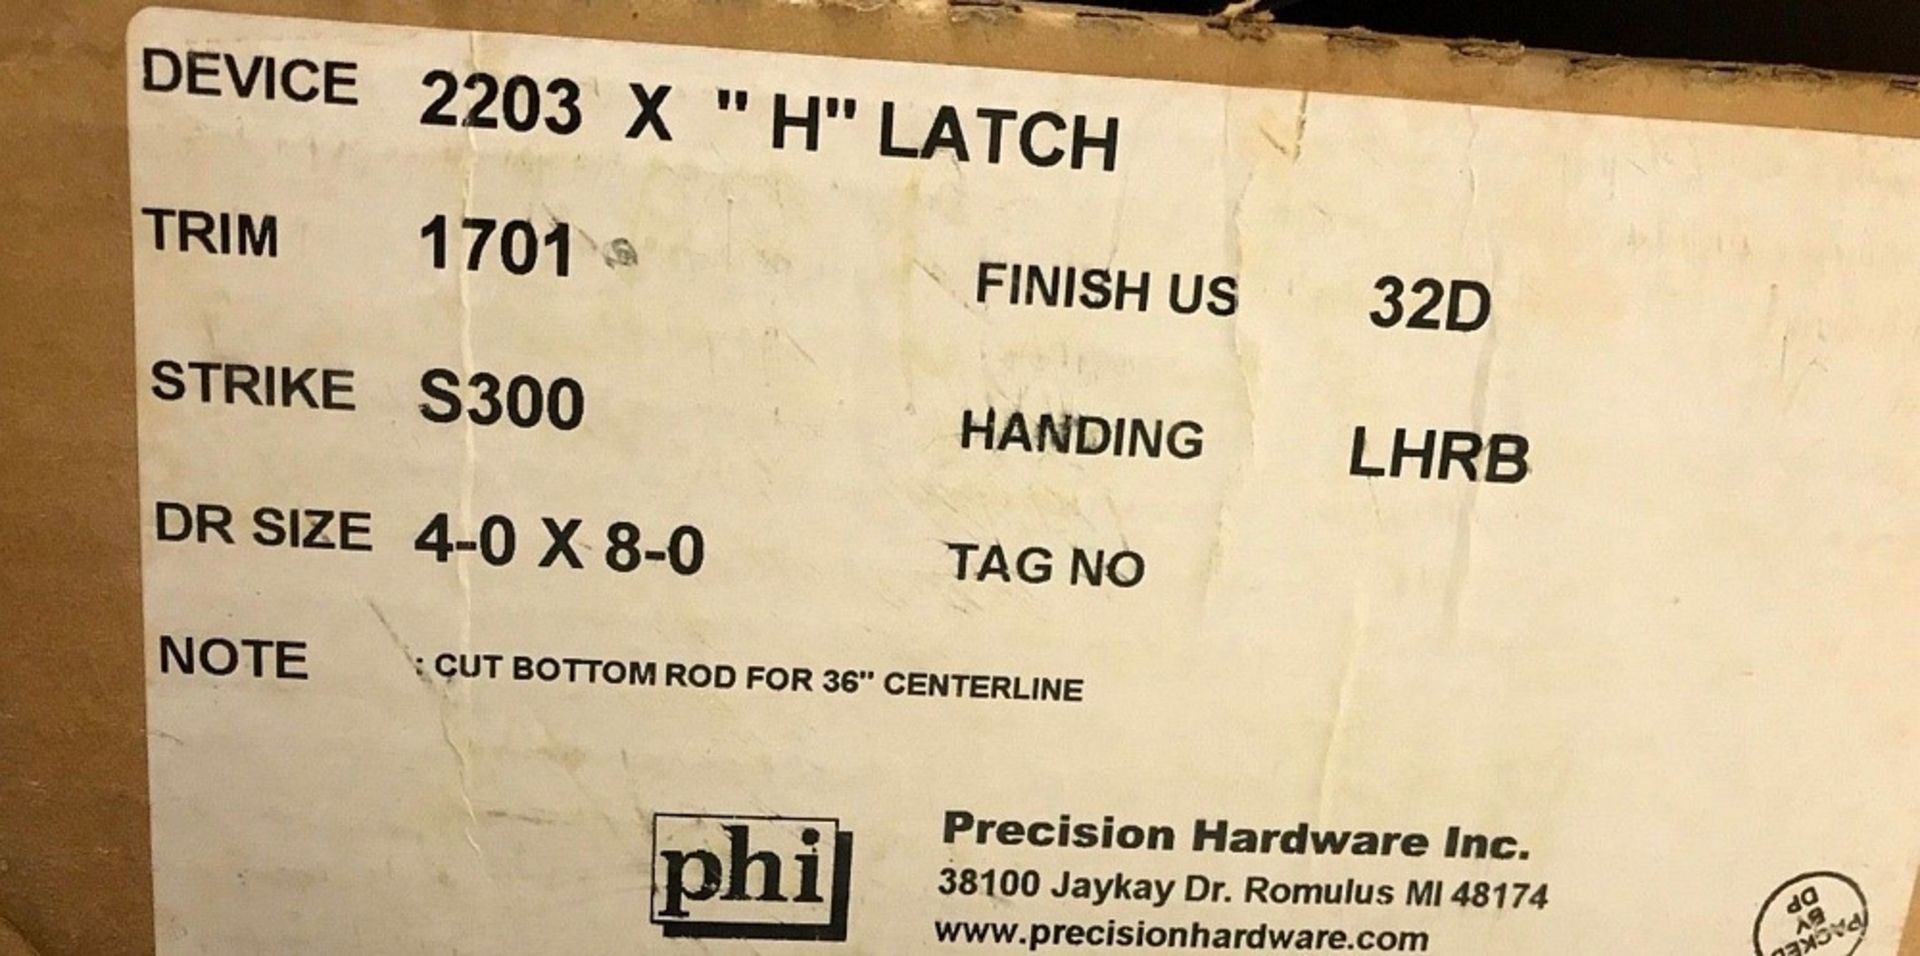 Precision Hardware Door Push Exit Device 2203 x "H" Latch - Image 4 of 4